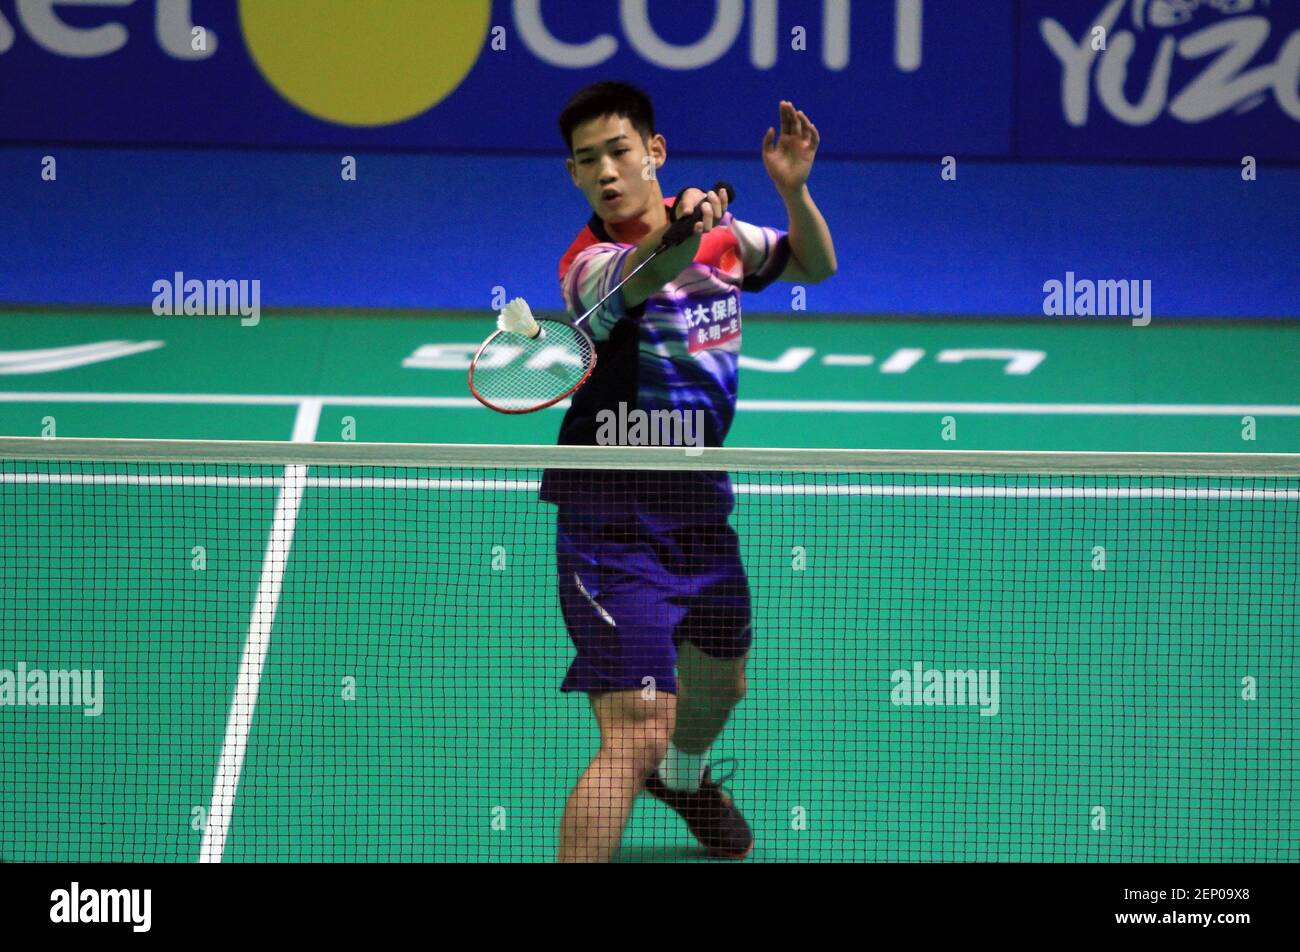 Badminton player China, mens singles champion, Sun Fei Xang defeated the 5th seeded Tanongsak Saensomboonsuk (Thailand) final result 21-19, 21-14